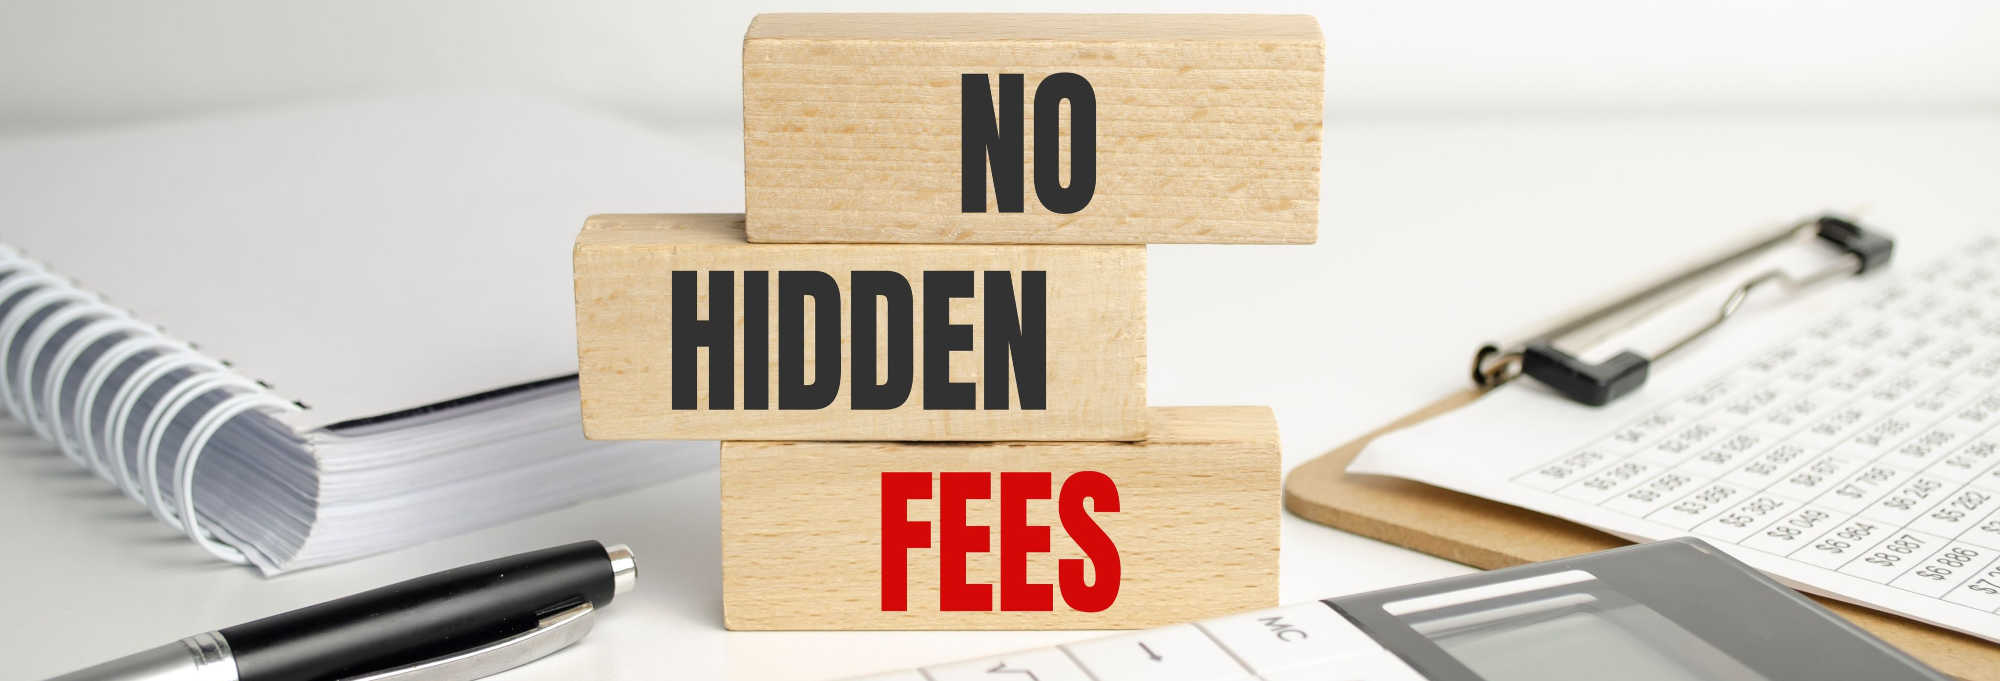 cyogate-has-no-hidden-fees